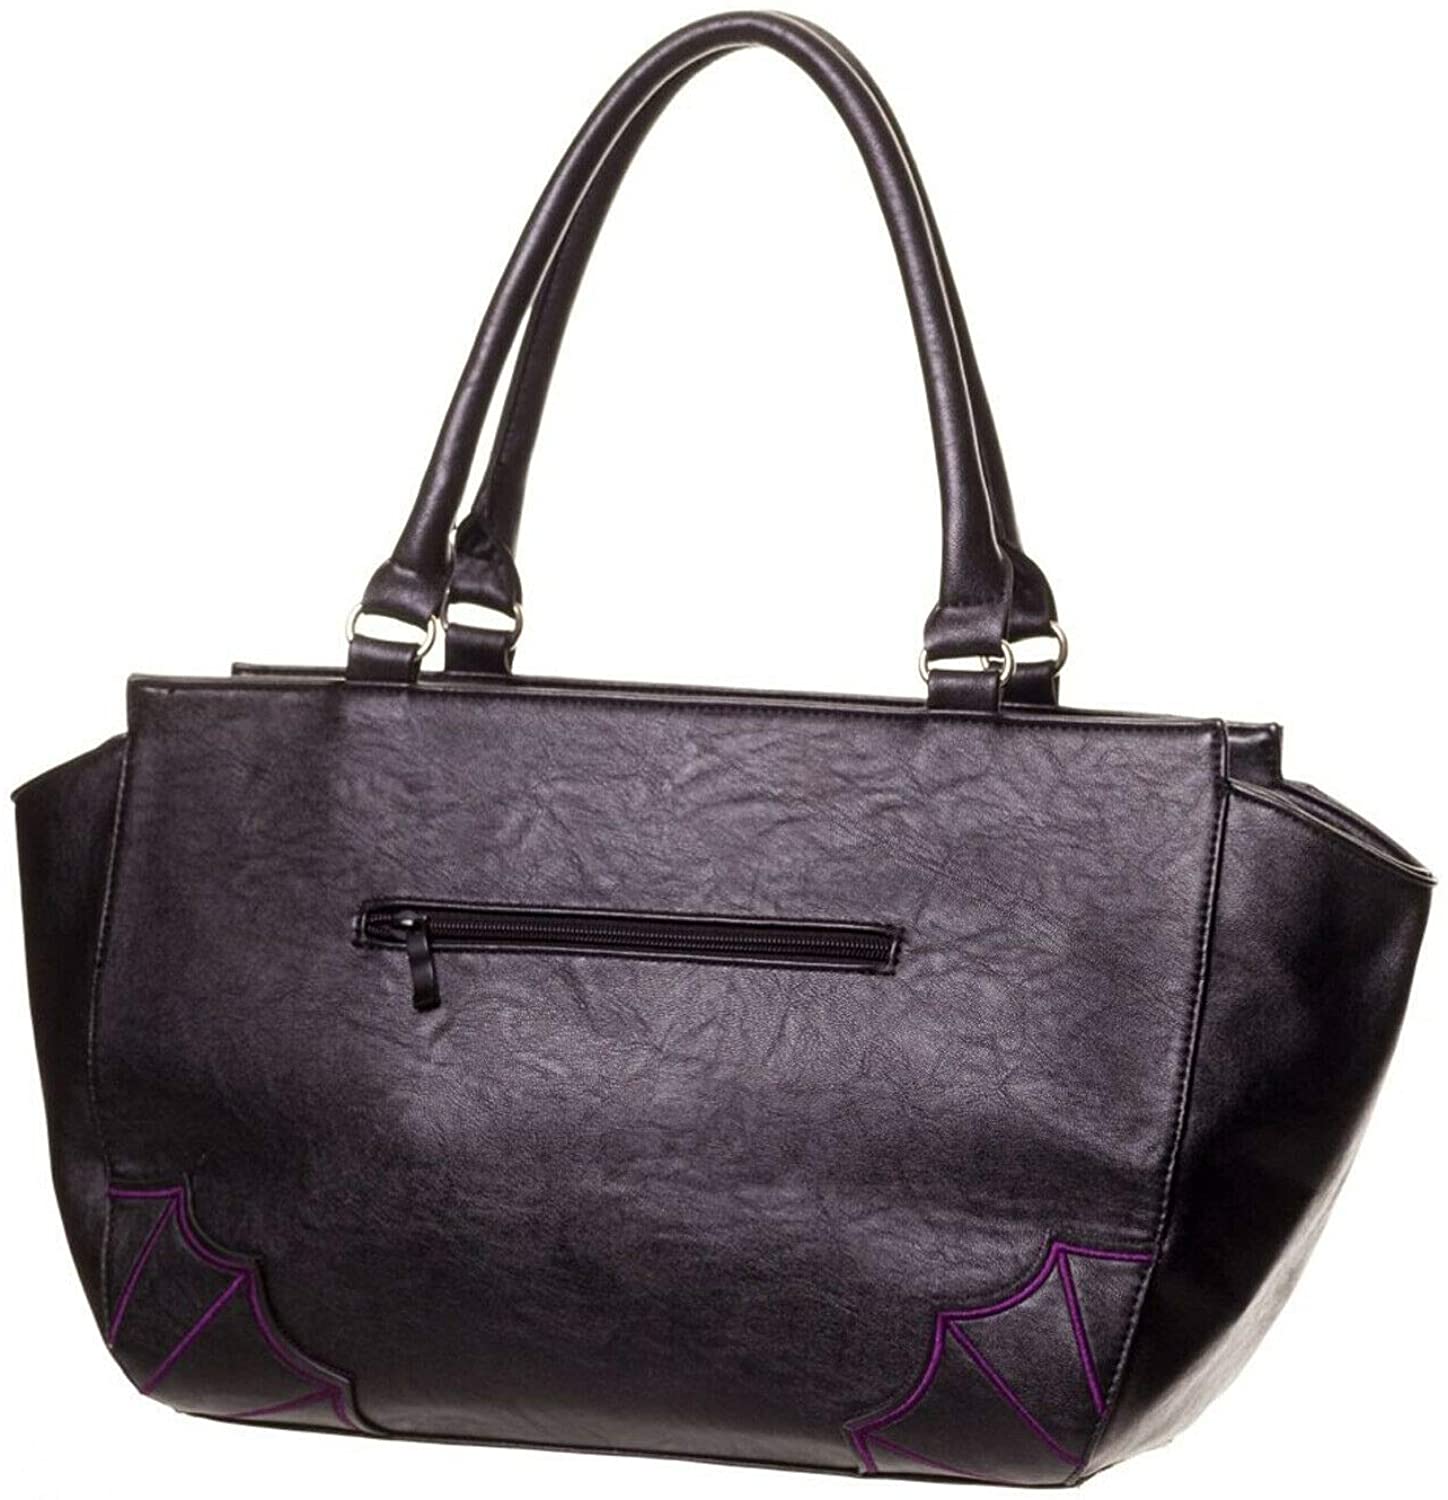 Lost Queen Women's Bats Handbag Dark Gothic Purse Alternative Shoulder Bag